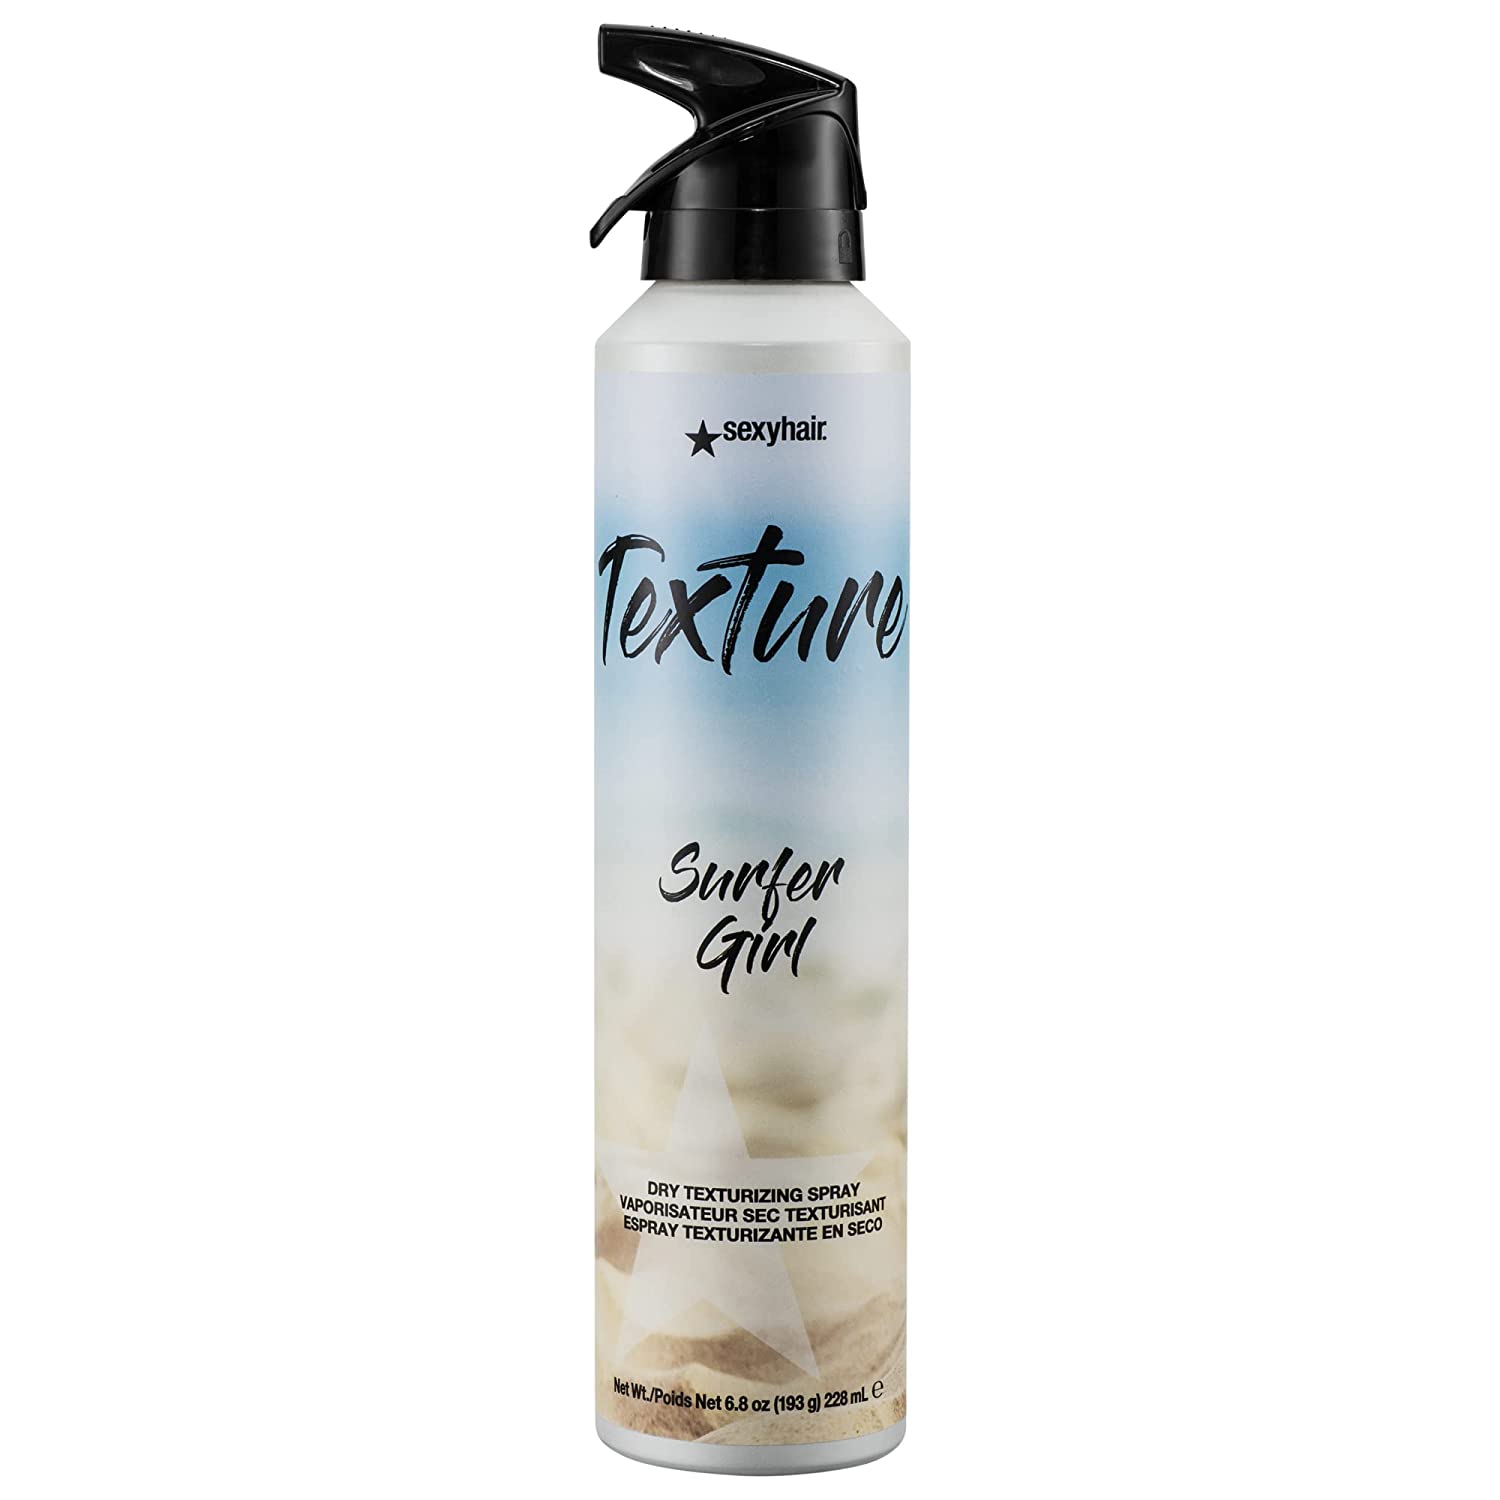 SexyHair Texture Surfer Girl Dry Texturizing Spray - 6.8 oz (Buy 3 Get 1 Free Mix & Match)